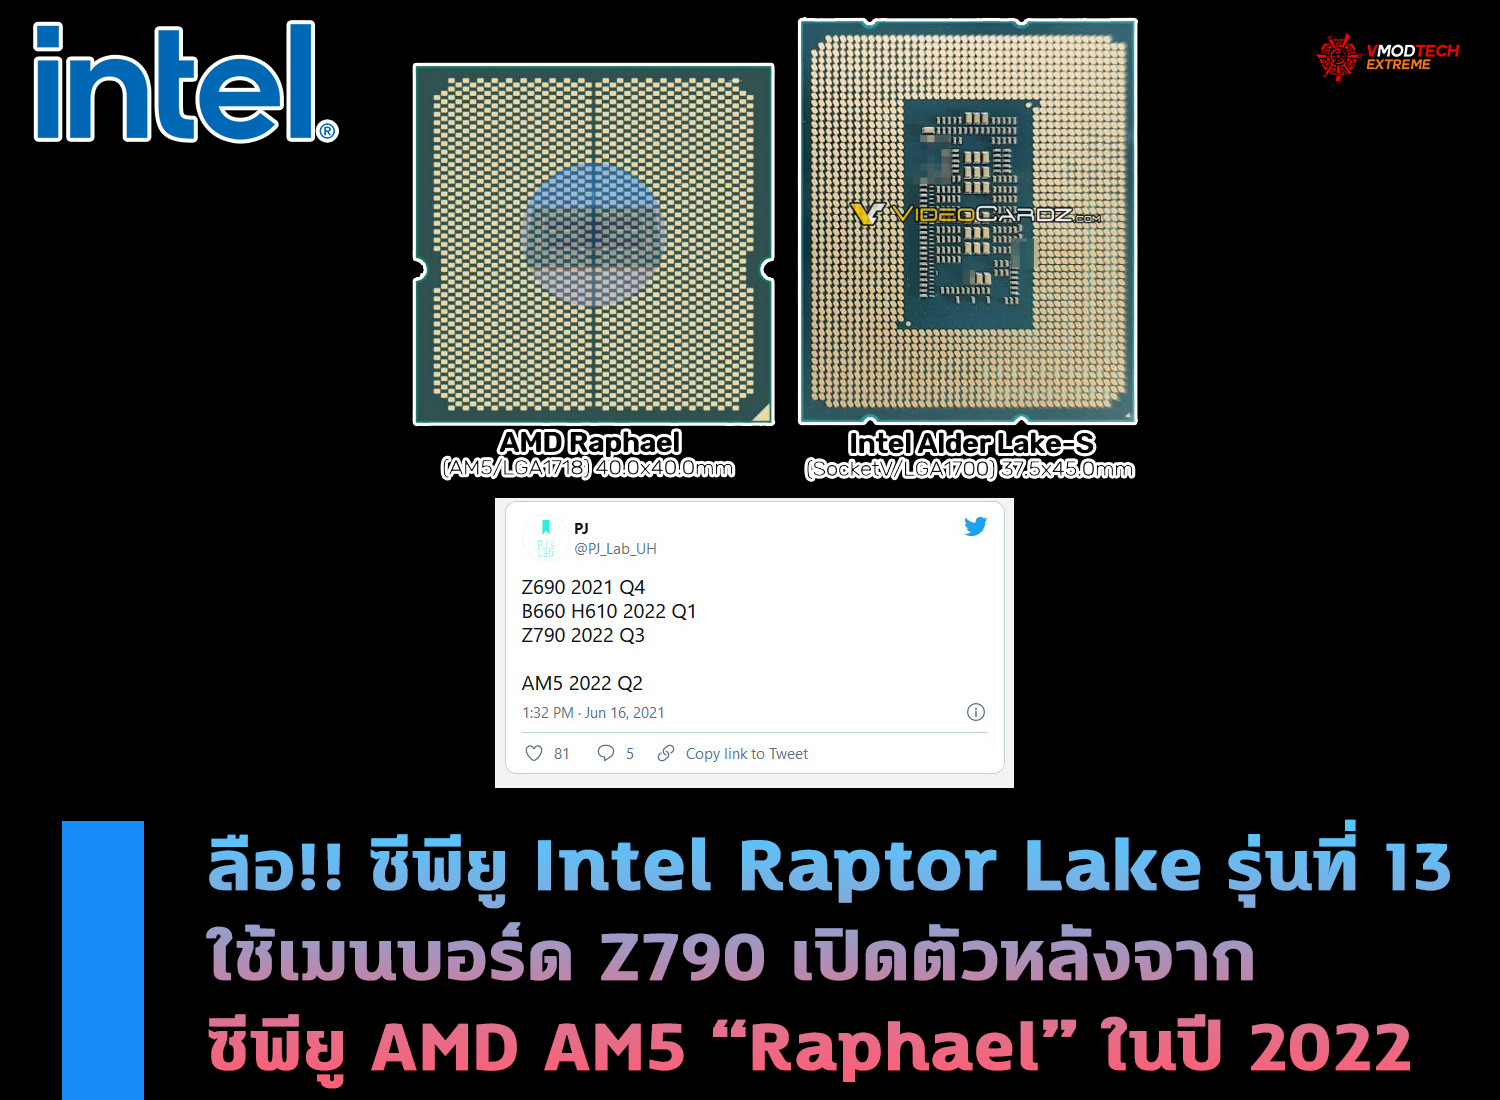 intel raptor lake 13th gen ลือ!! Intel Raptor Lake รุ่นที่ 13 ใช้เมนบอร์ด Z790 เตรียมเปิดตัวไตรมาสที่ 3ในปี 2022 